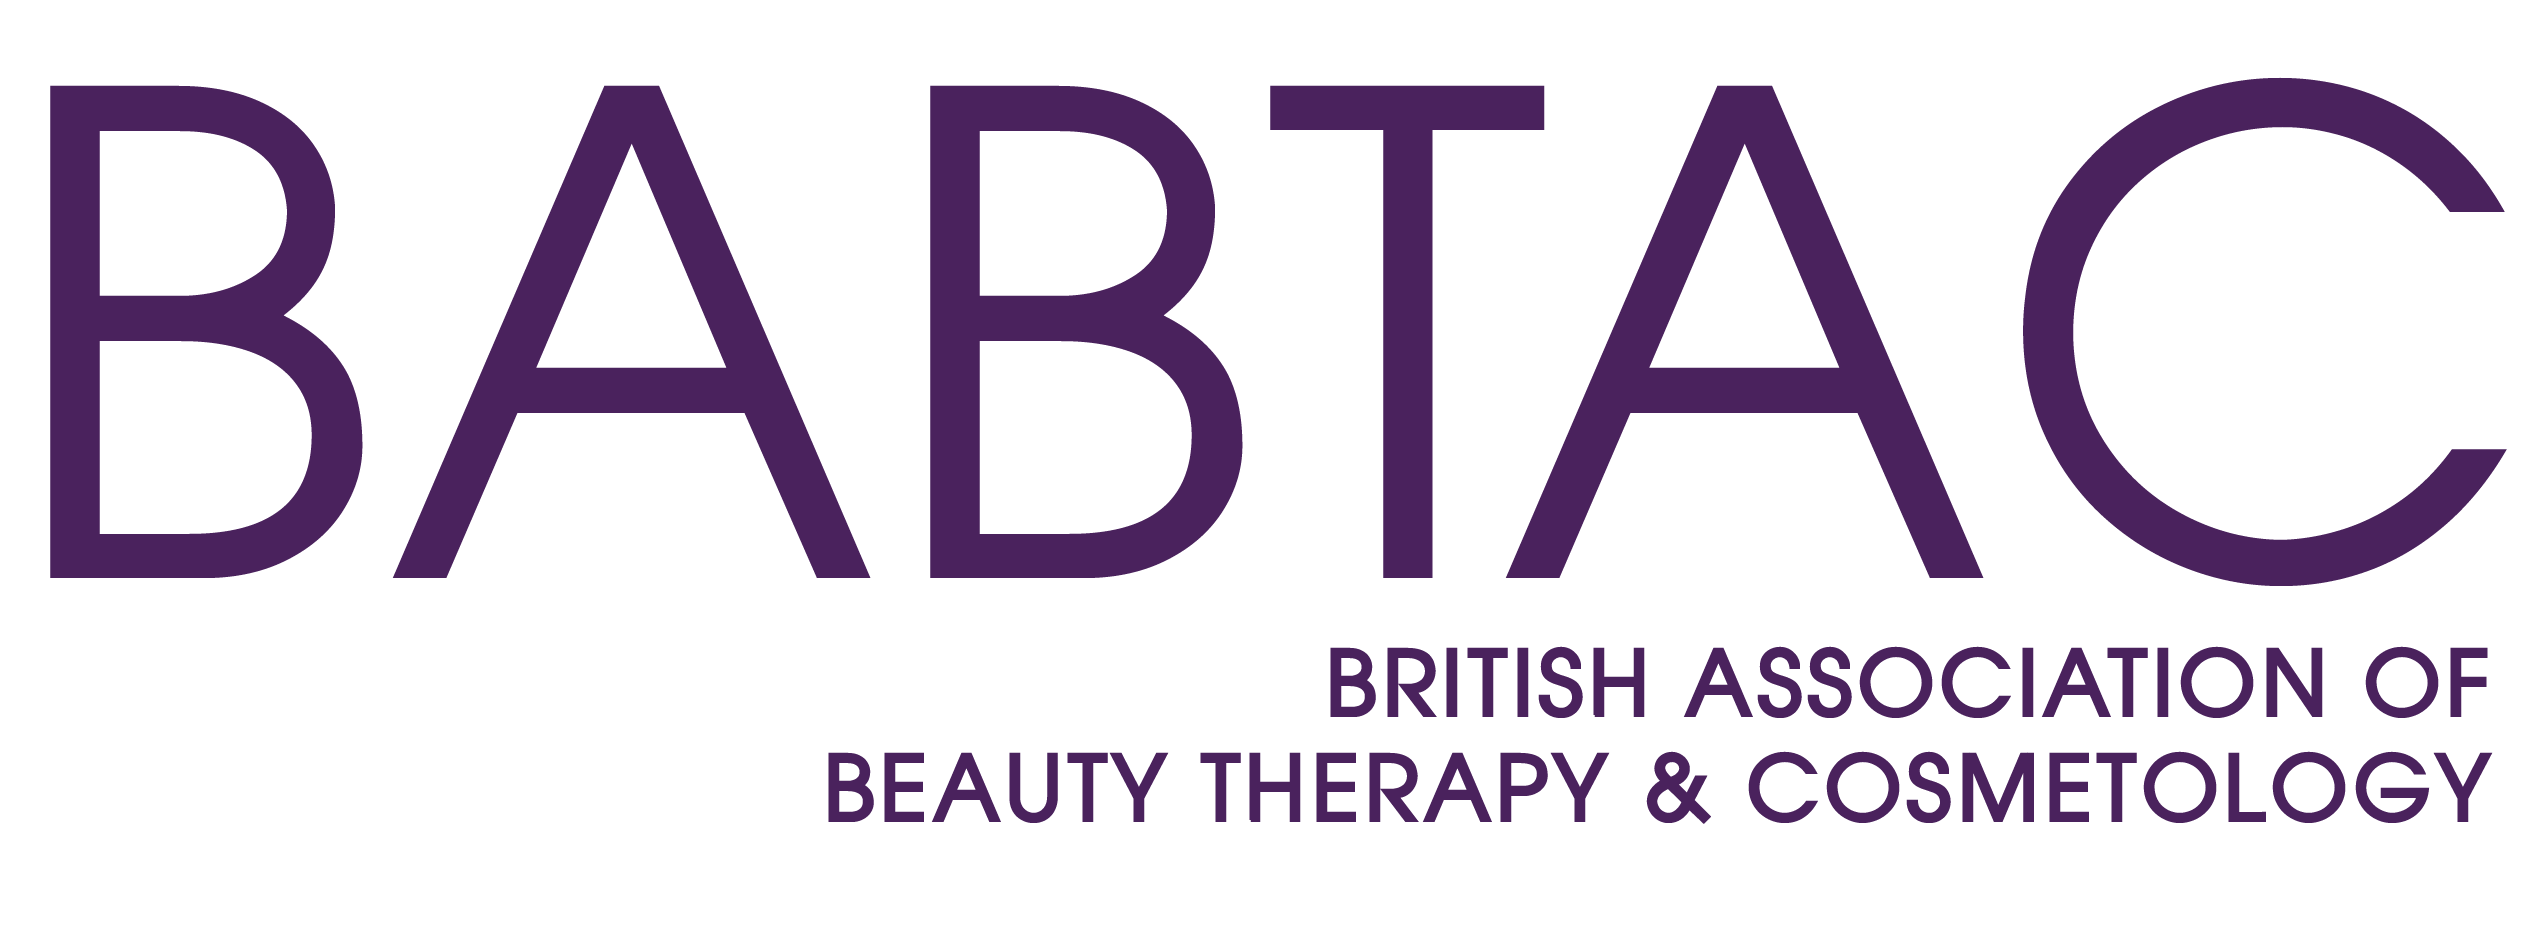 British Association of Beauty Therapy & Cosmetology Logo